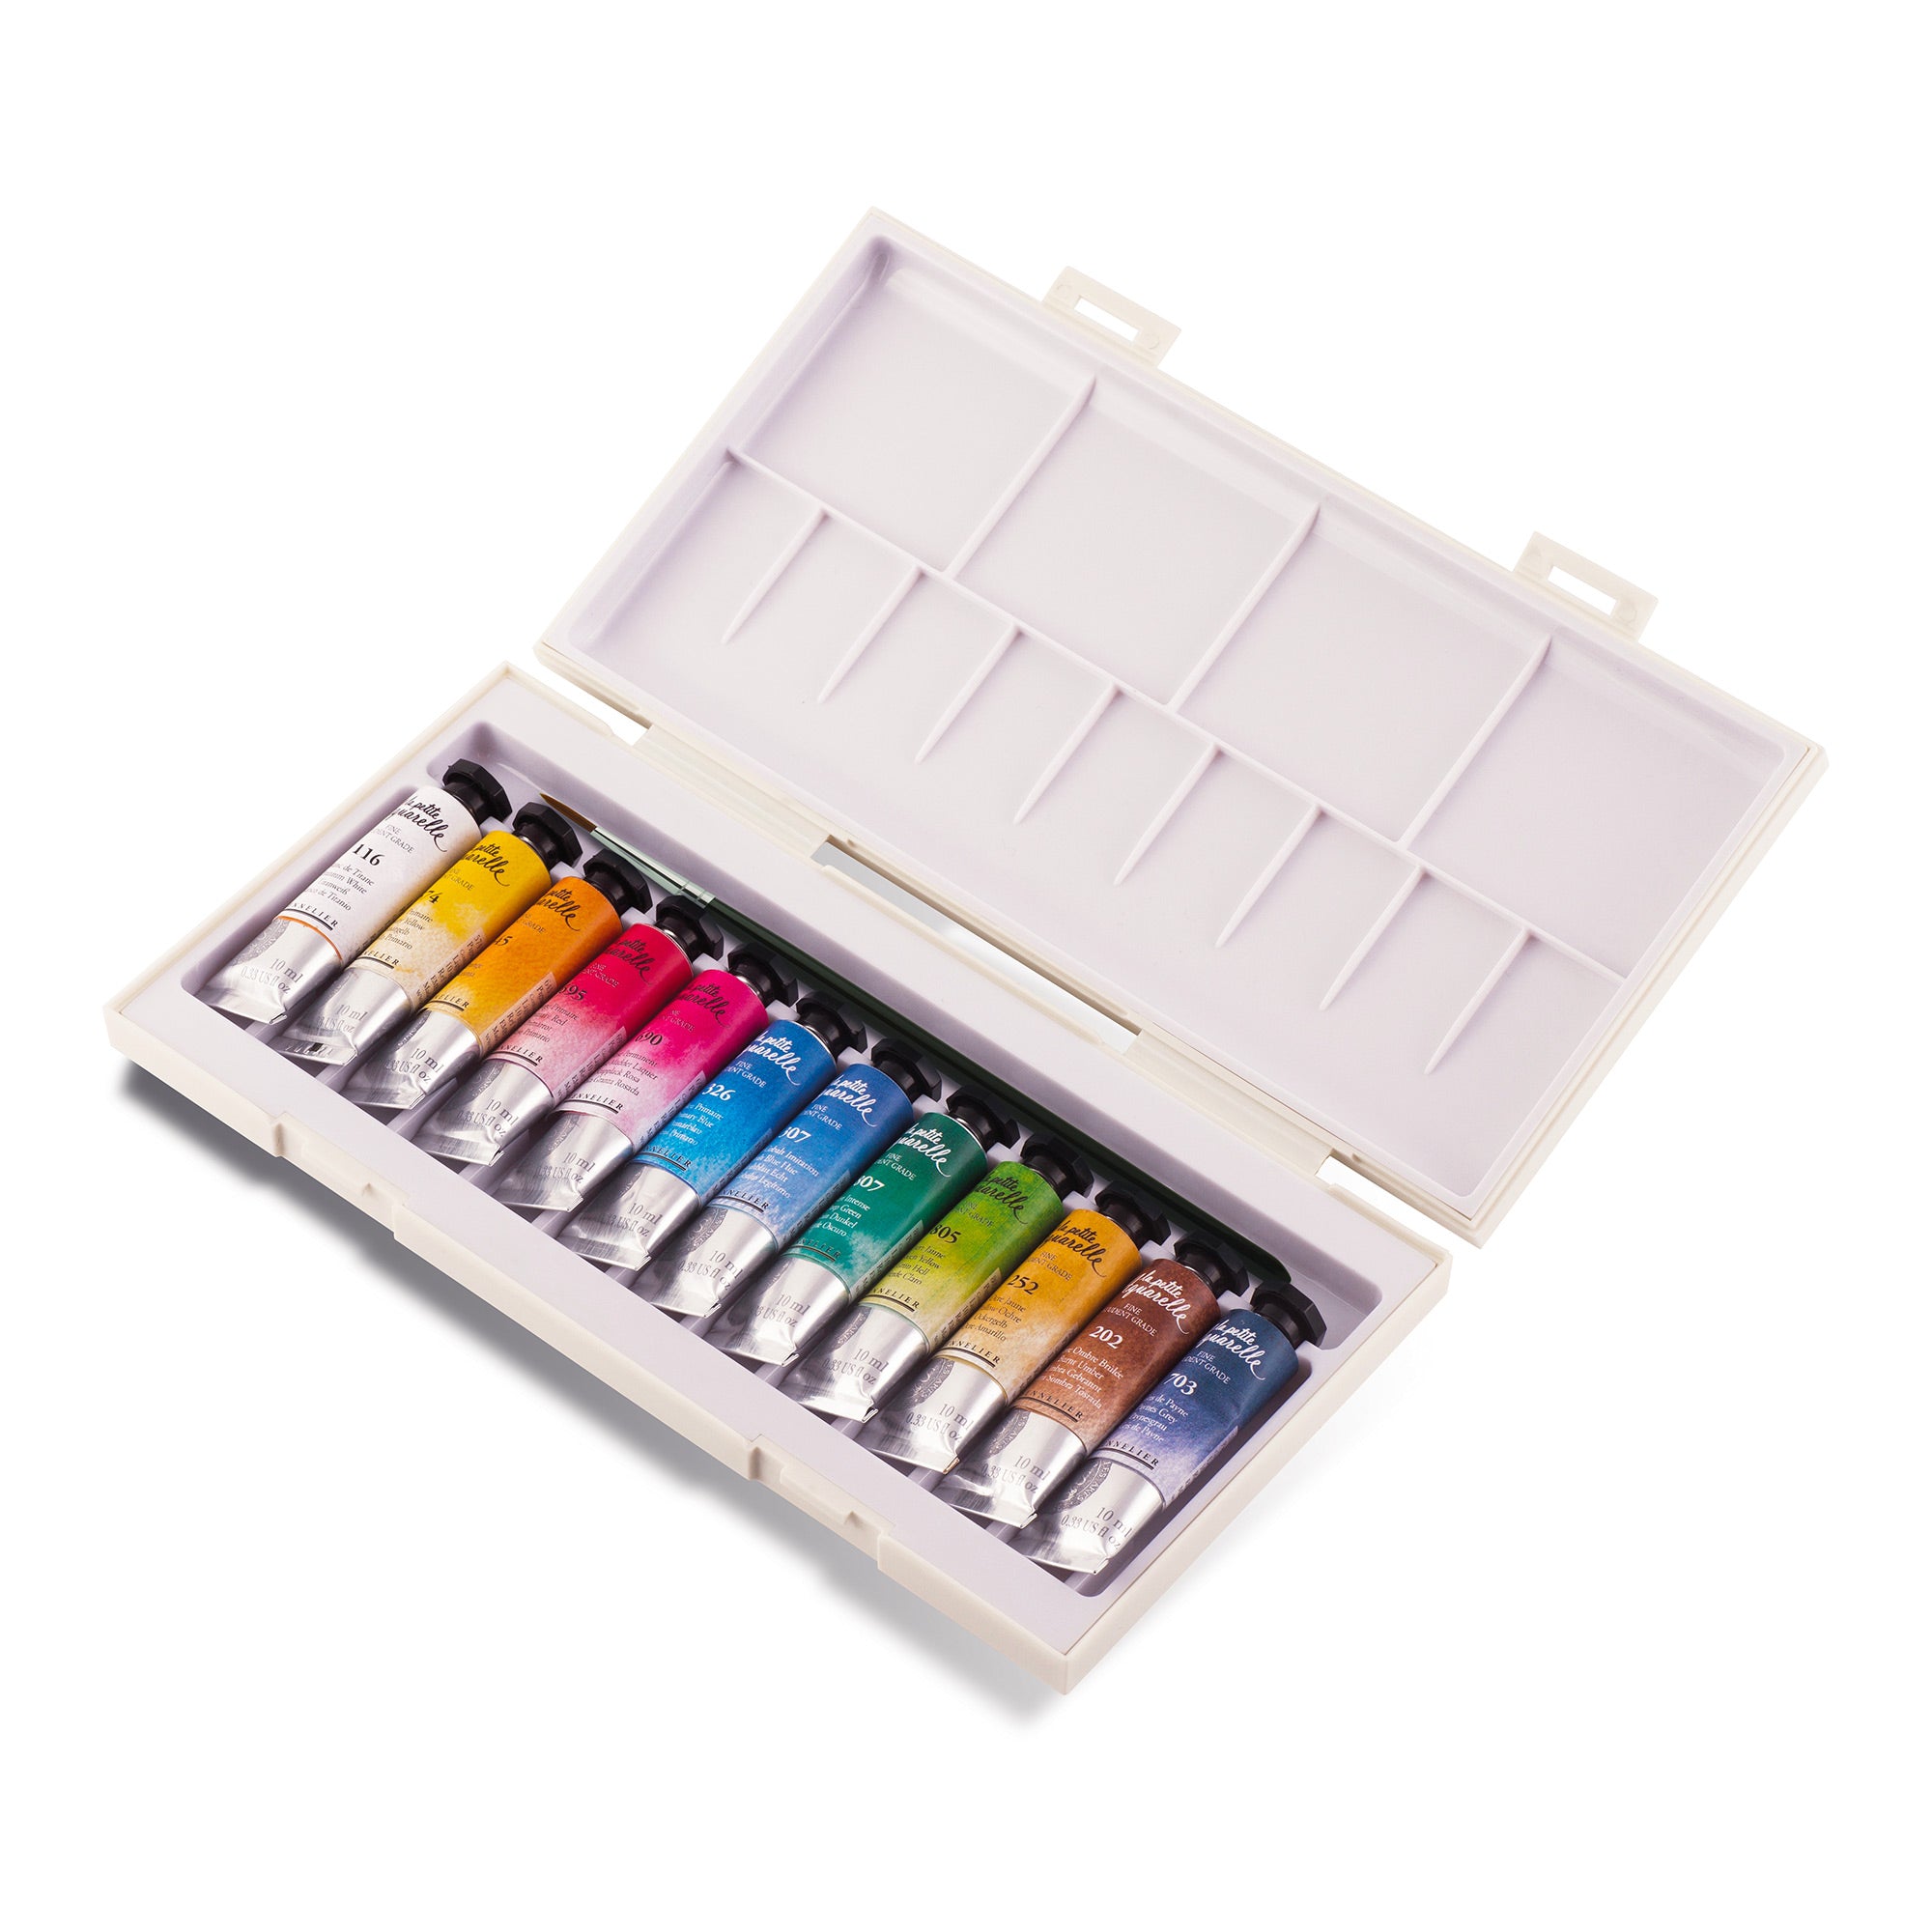 Impresa 8oz Acrylic Paint Thinner for Slow Drying Acrylic Paints, Acrylic Paint & Slow Drying Mediums Paint Mixes, Thins Paints